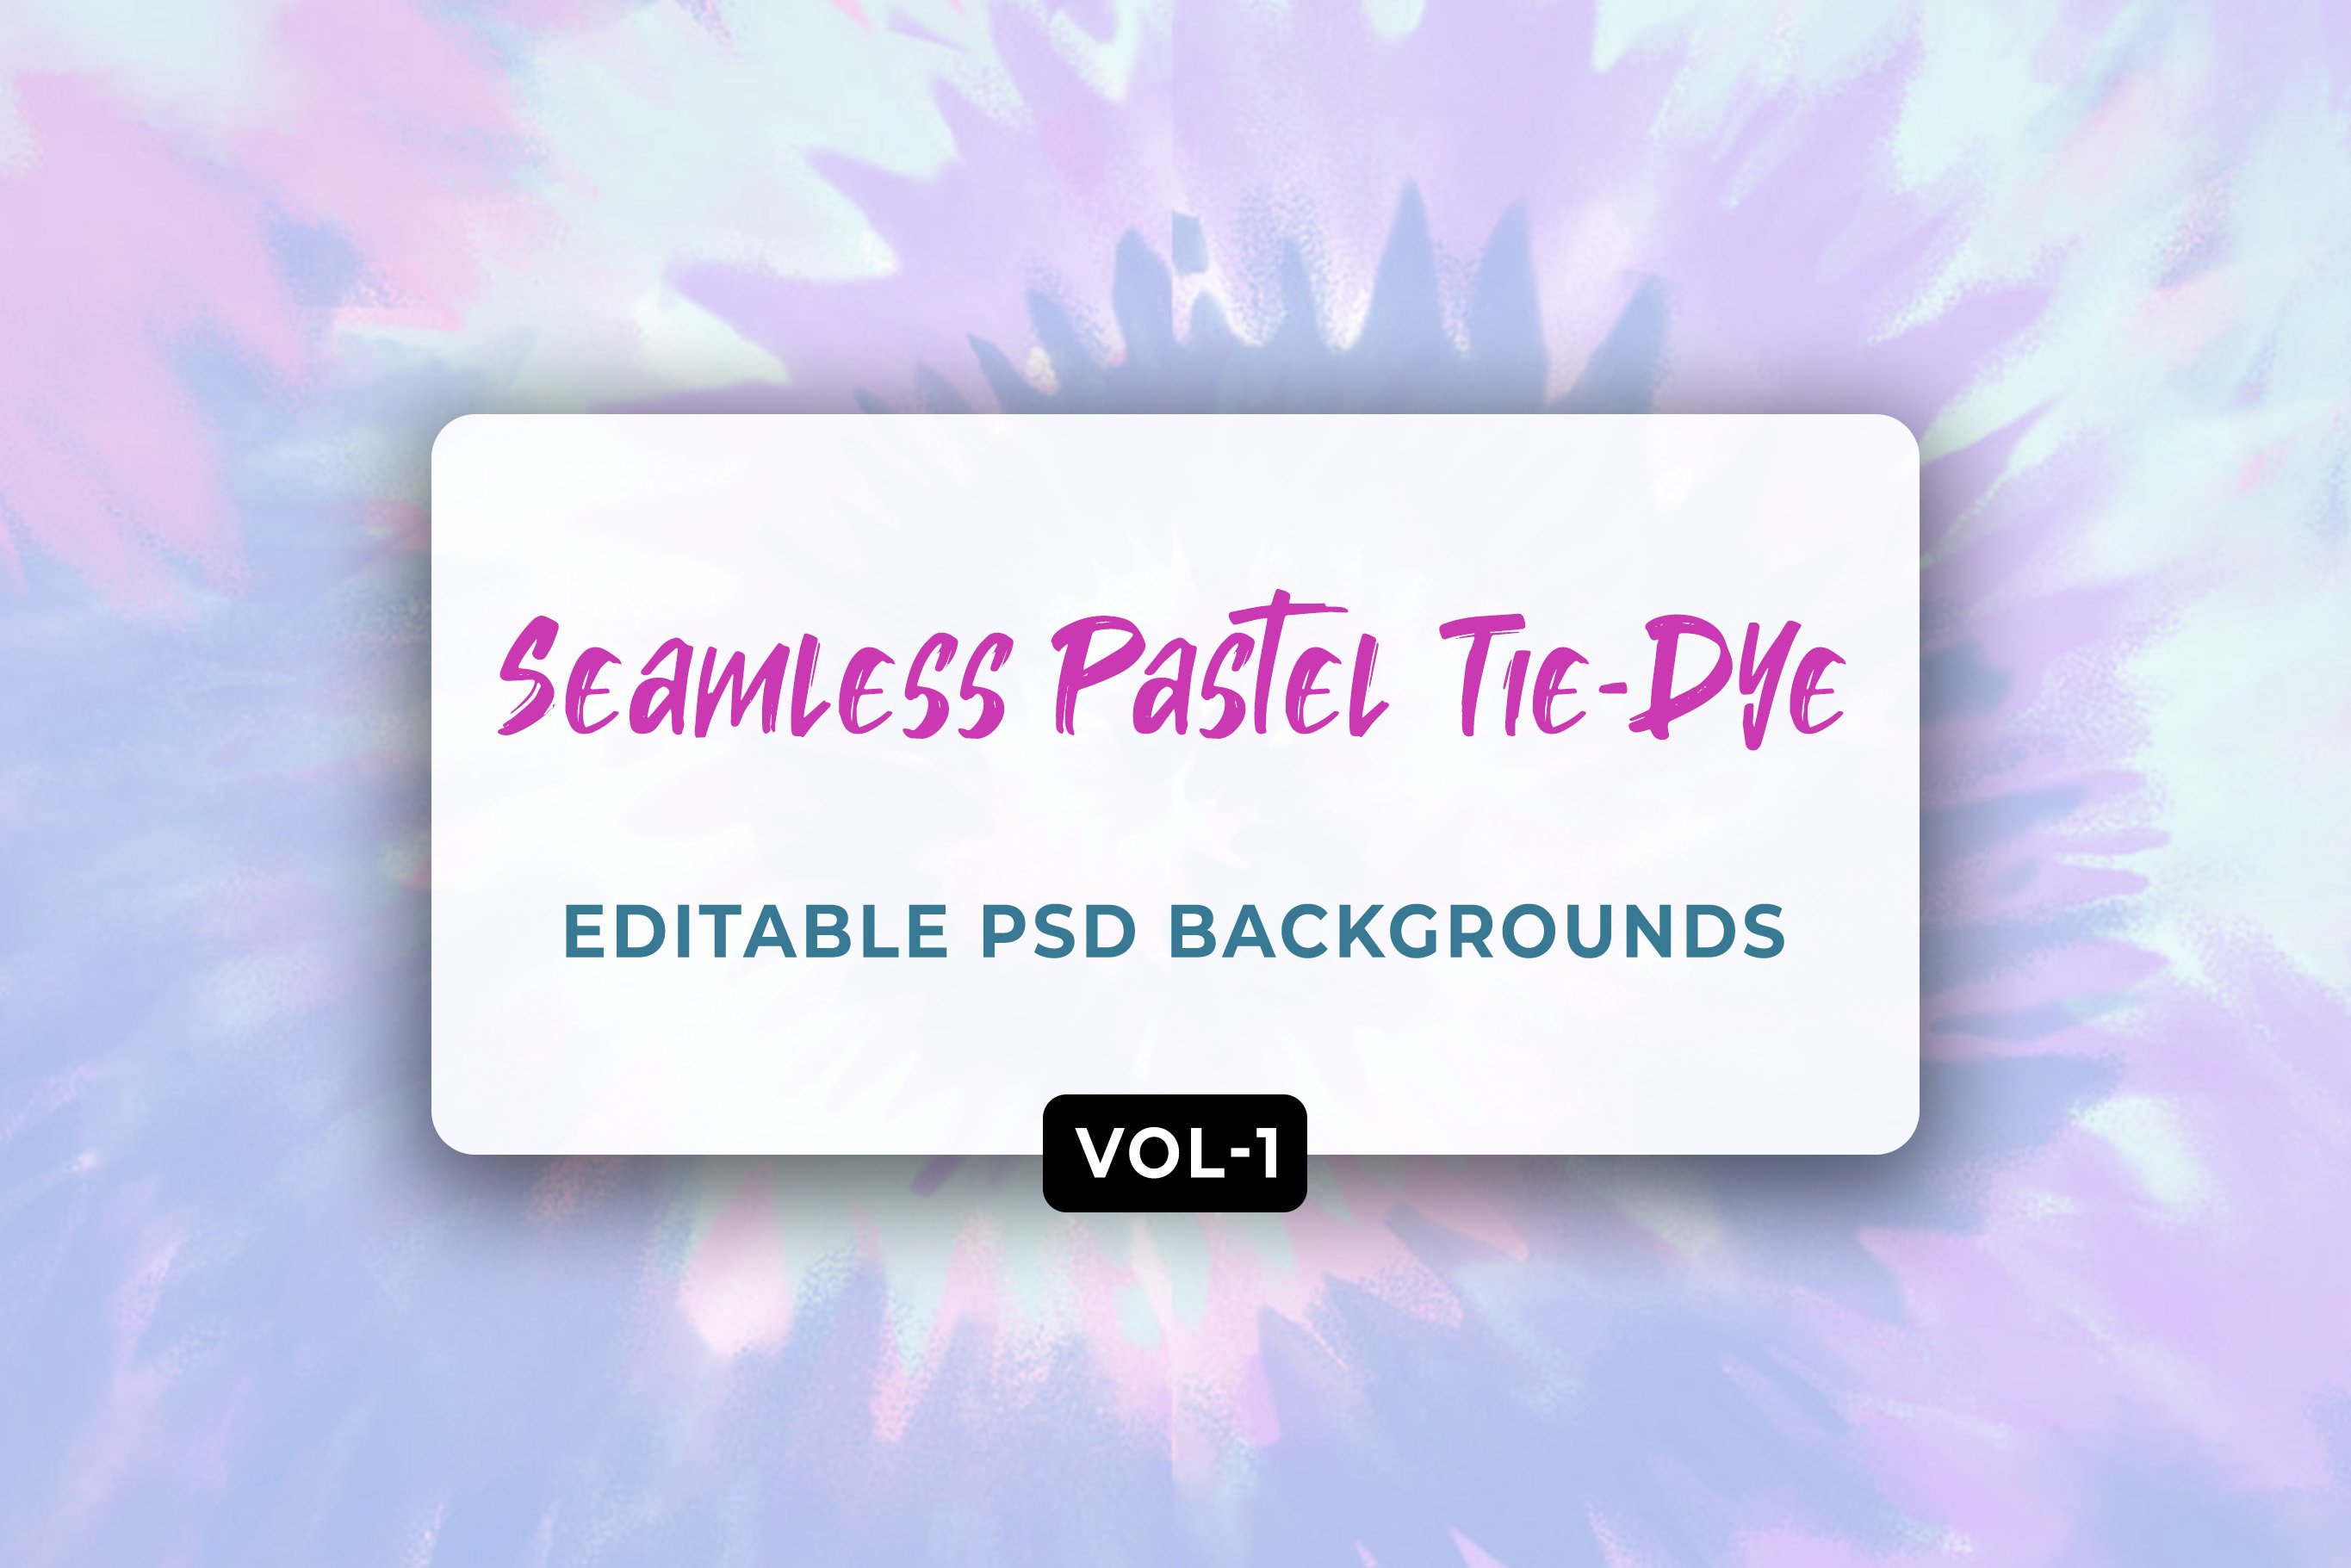 Seamless Pastel Tie-Dye Vol-01 cover image.